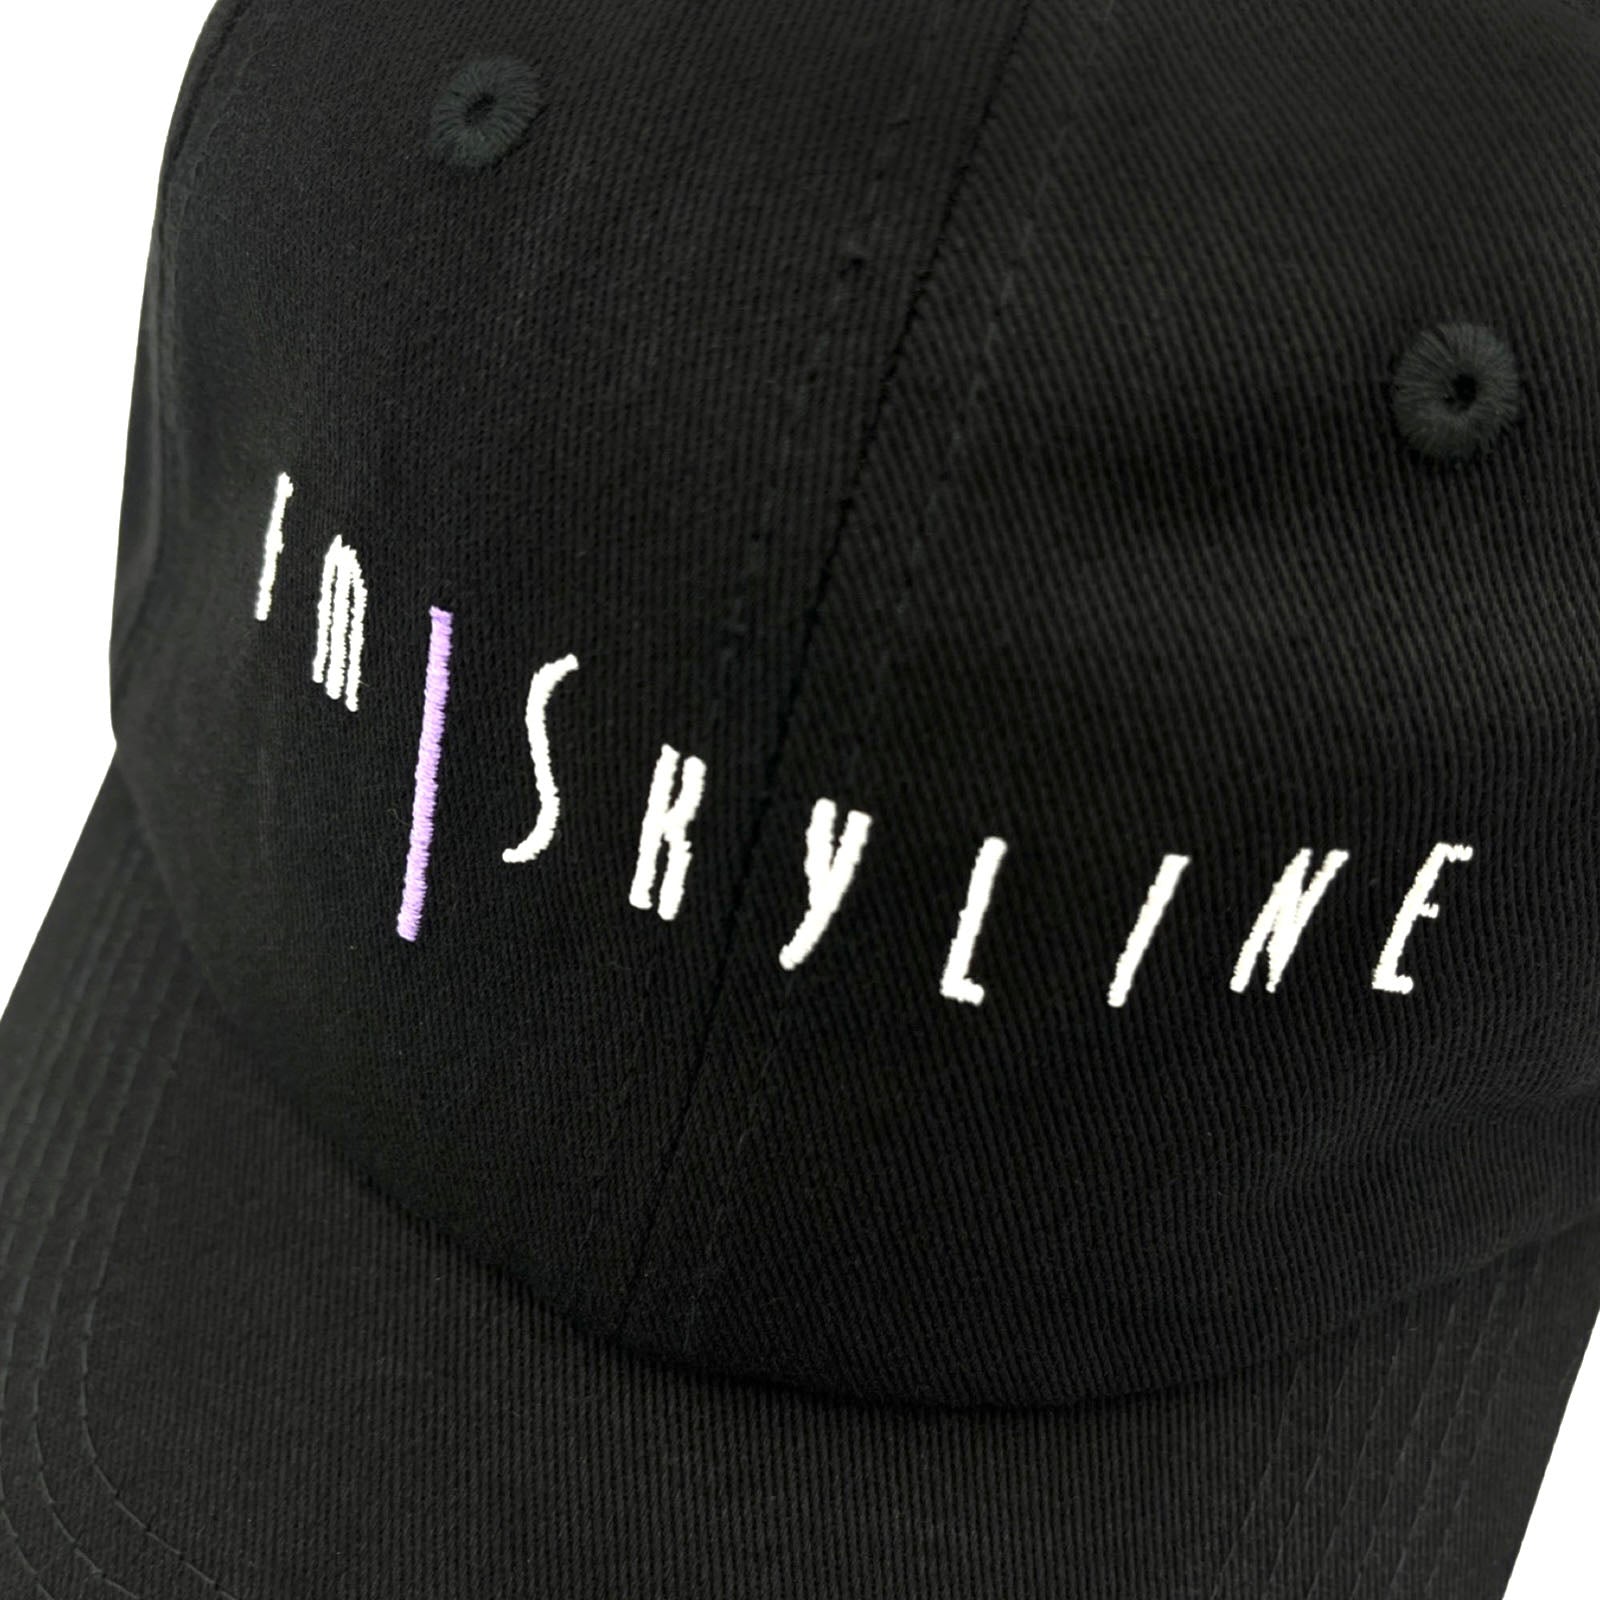 FM Skyline - FM Skyline Cap - 100% Electronica Official Store (Photo 4)